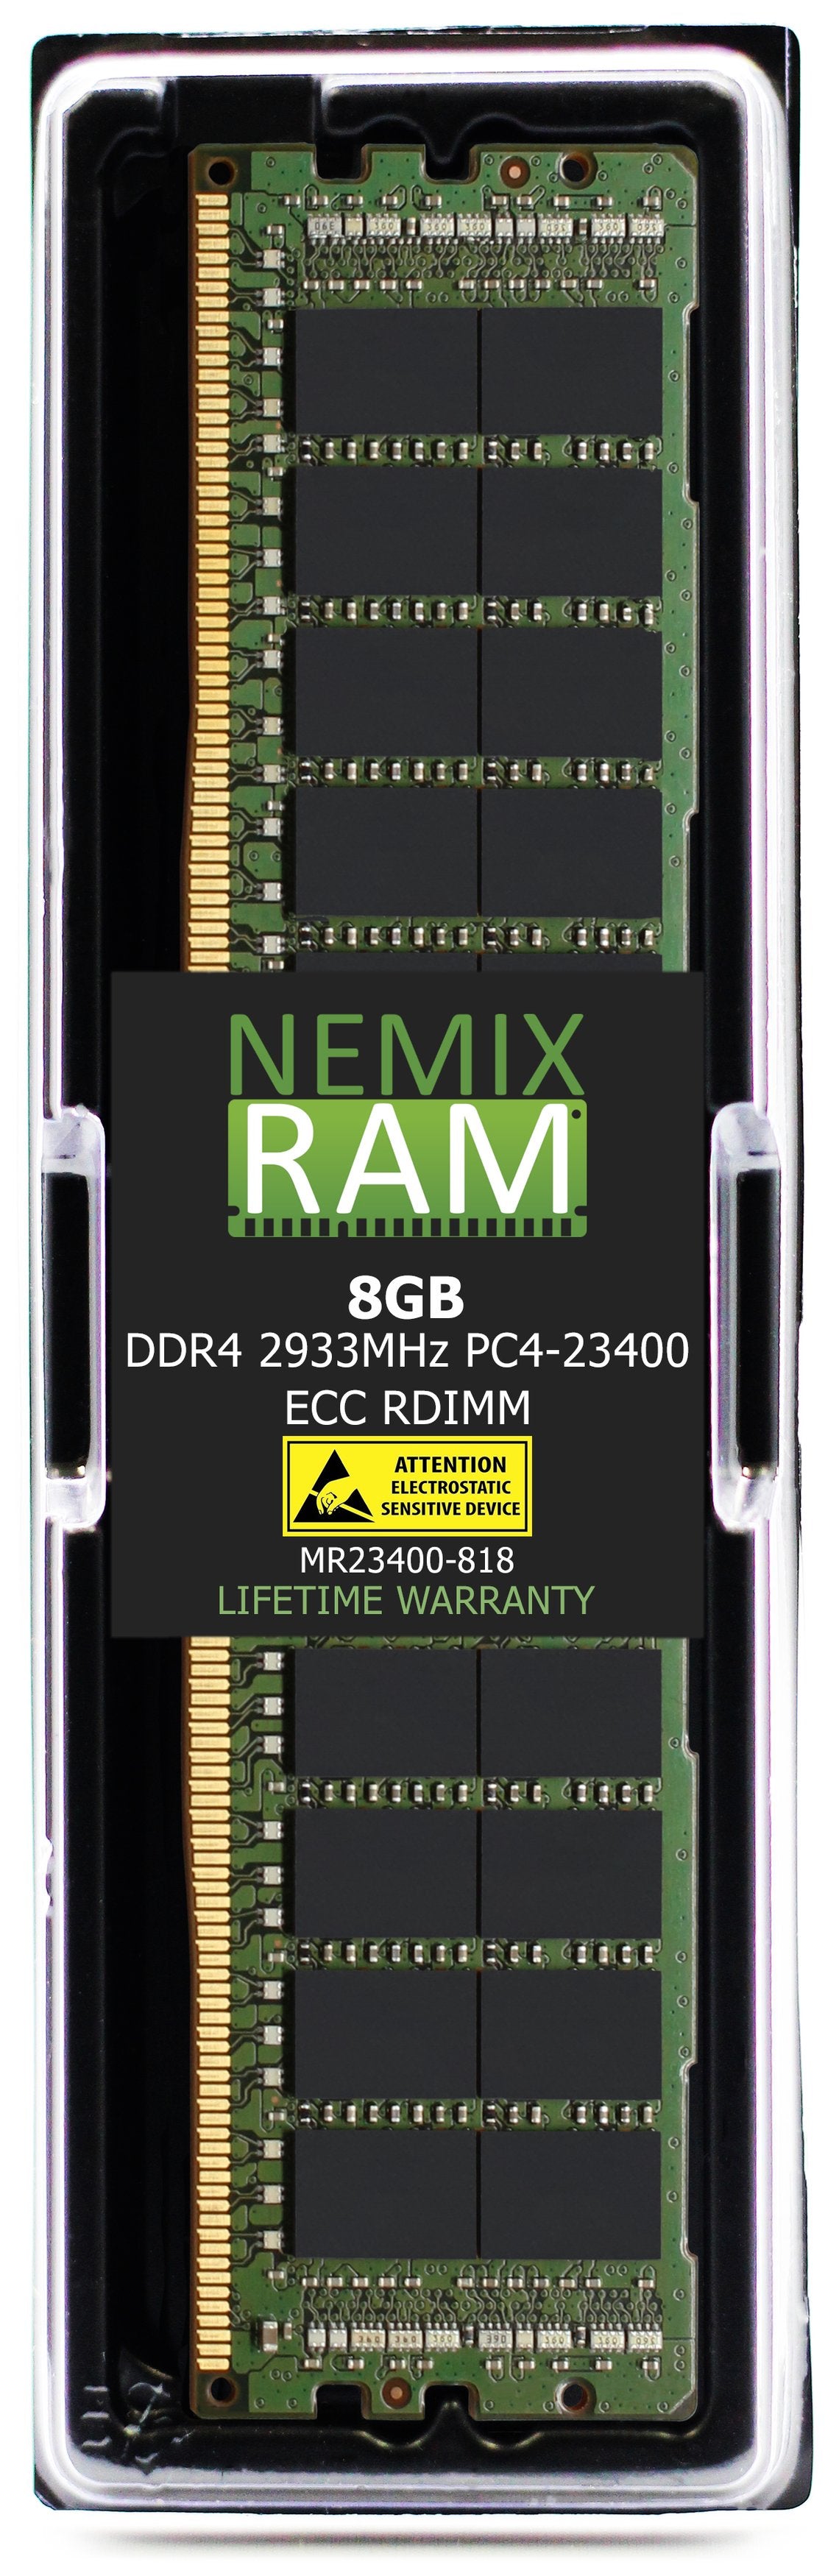 8GB DDR4 2933MHZ PC4-23400 RDIMM Compatible with Supermicro MEM-DR480L-HL01-ER29